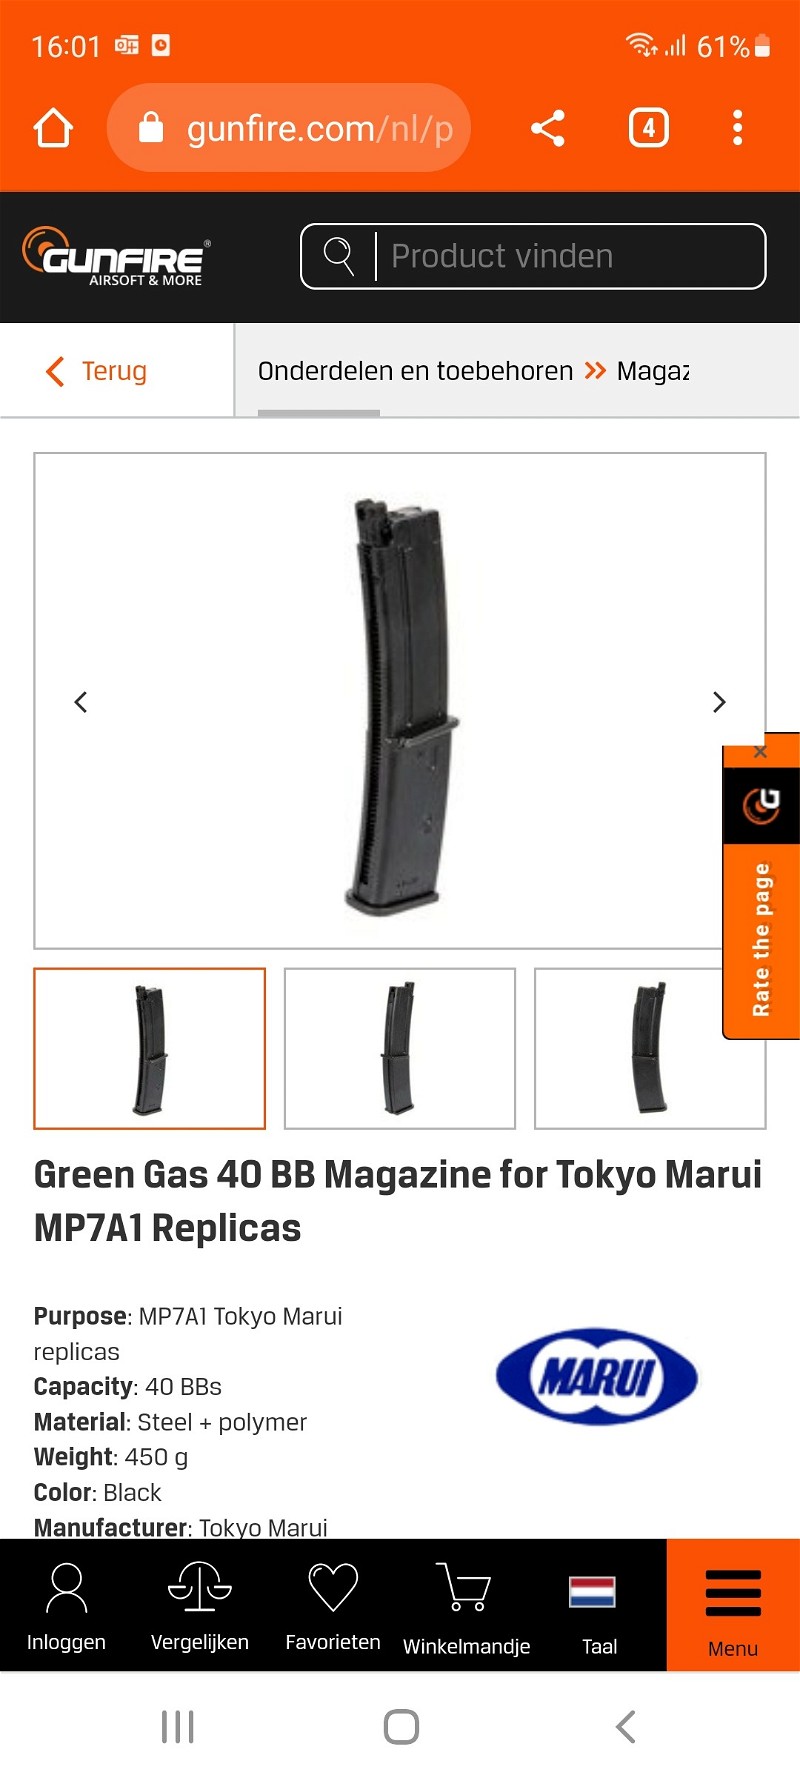 Image 1 for Gezocht Tokyo marui mp7 gbb magazijnen